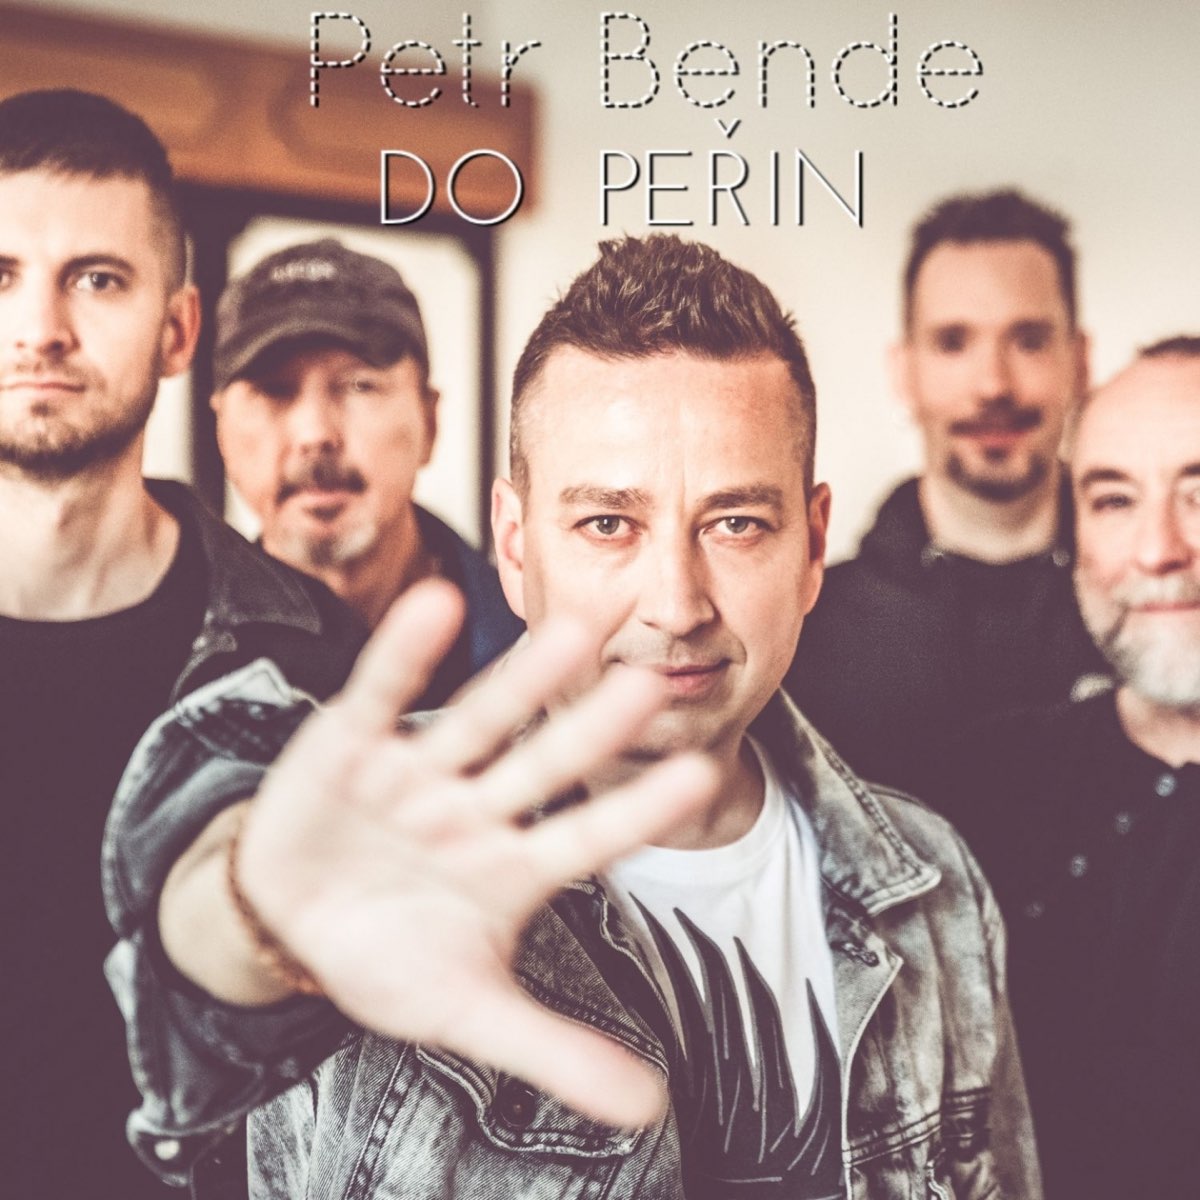 Do peřin - Single by Petr Bende on Apple Music